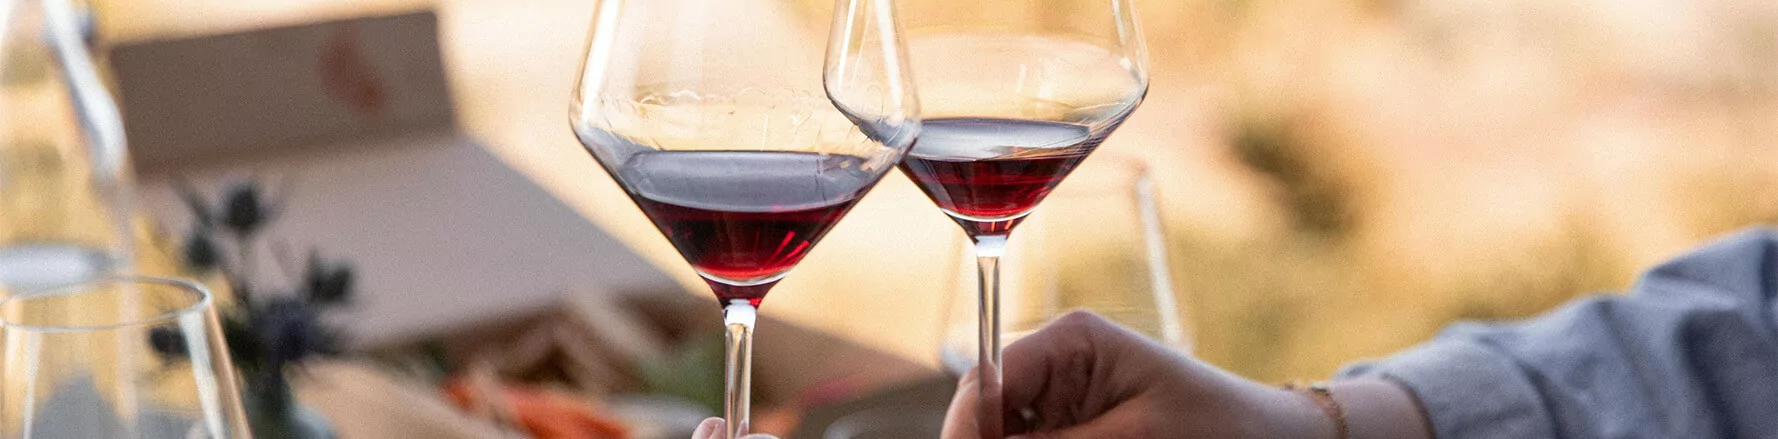 “Wine Tasting in Napa and Sonoma” intro image